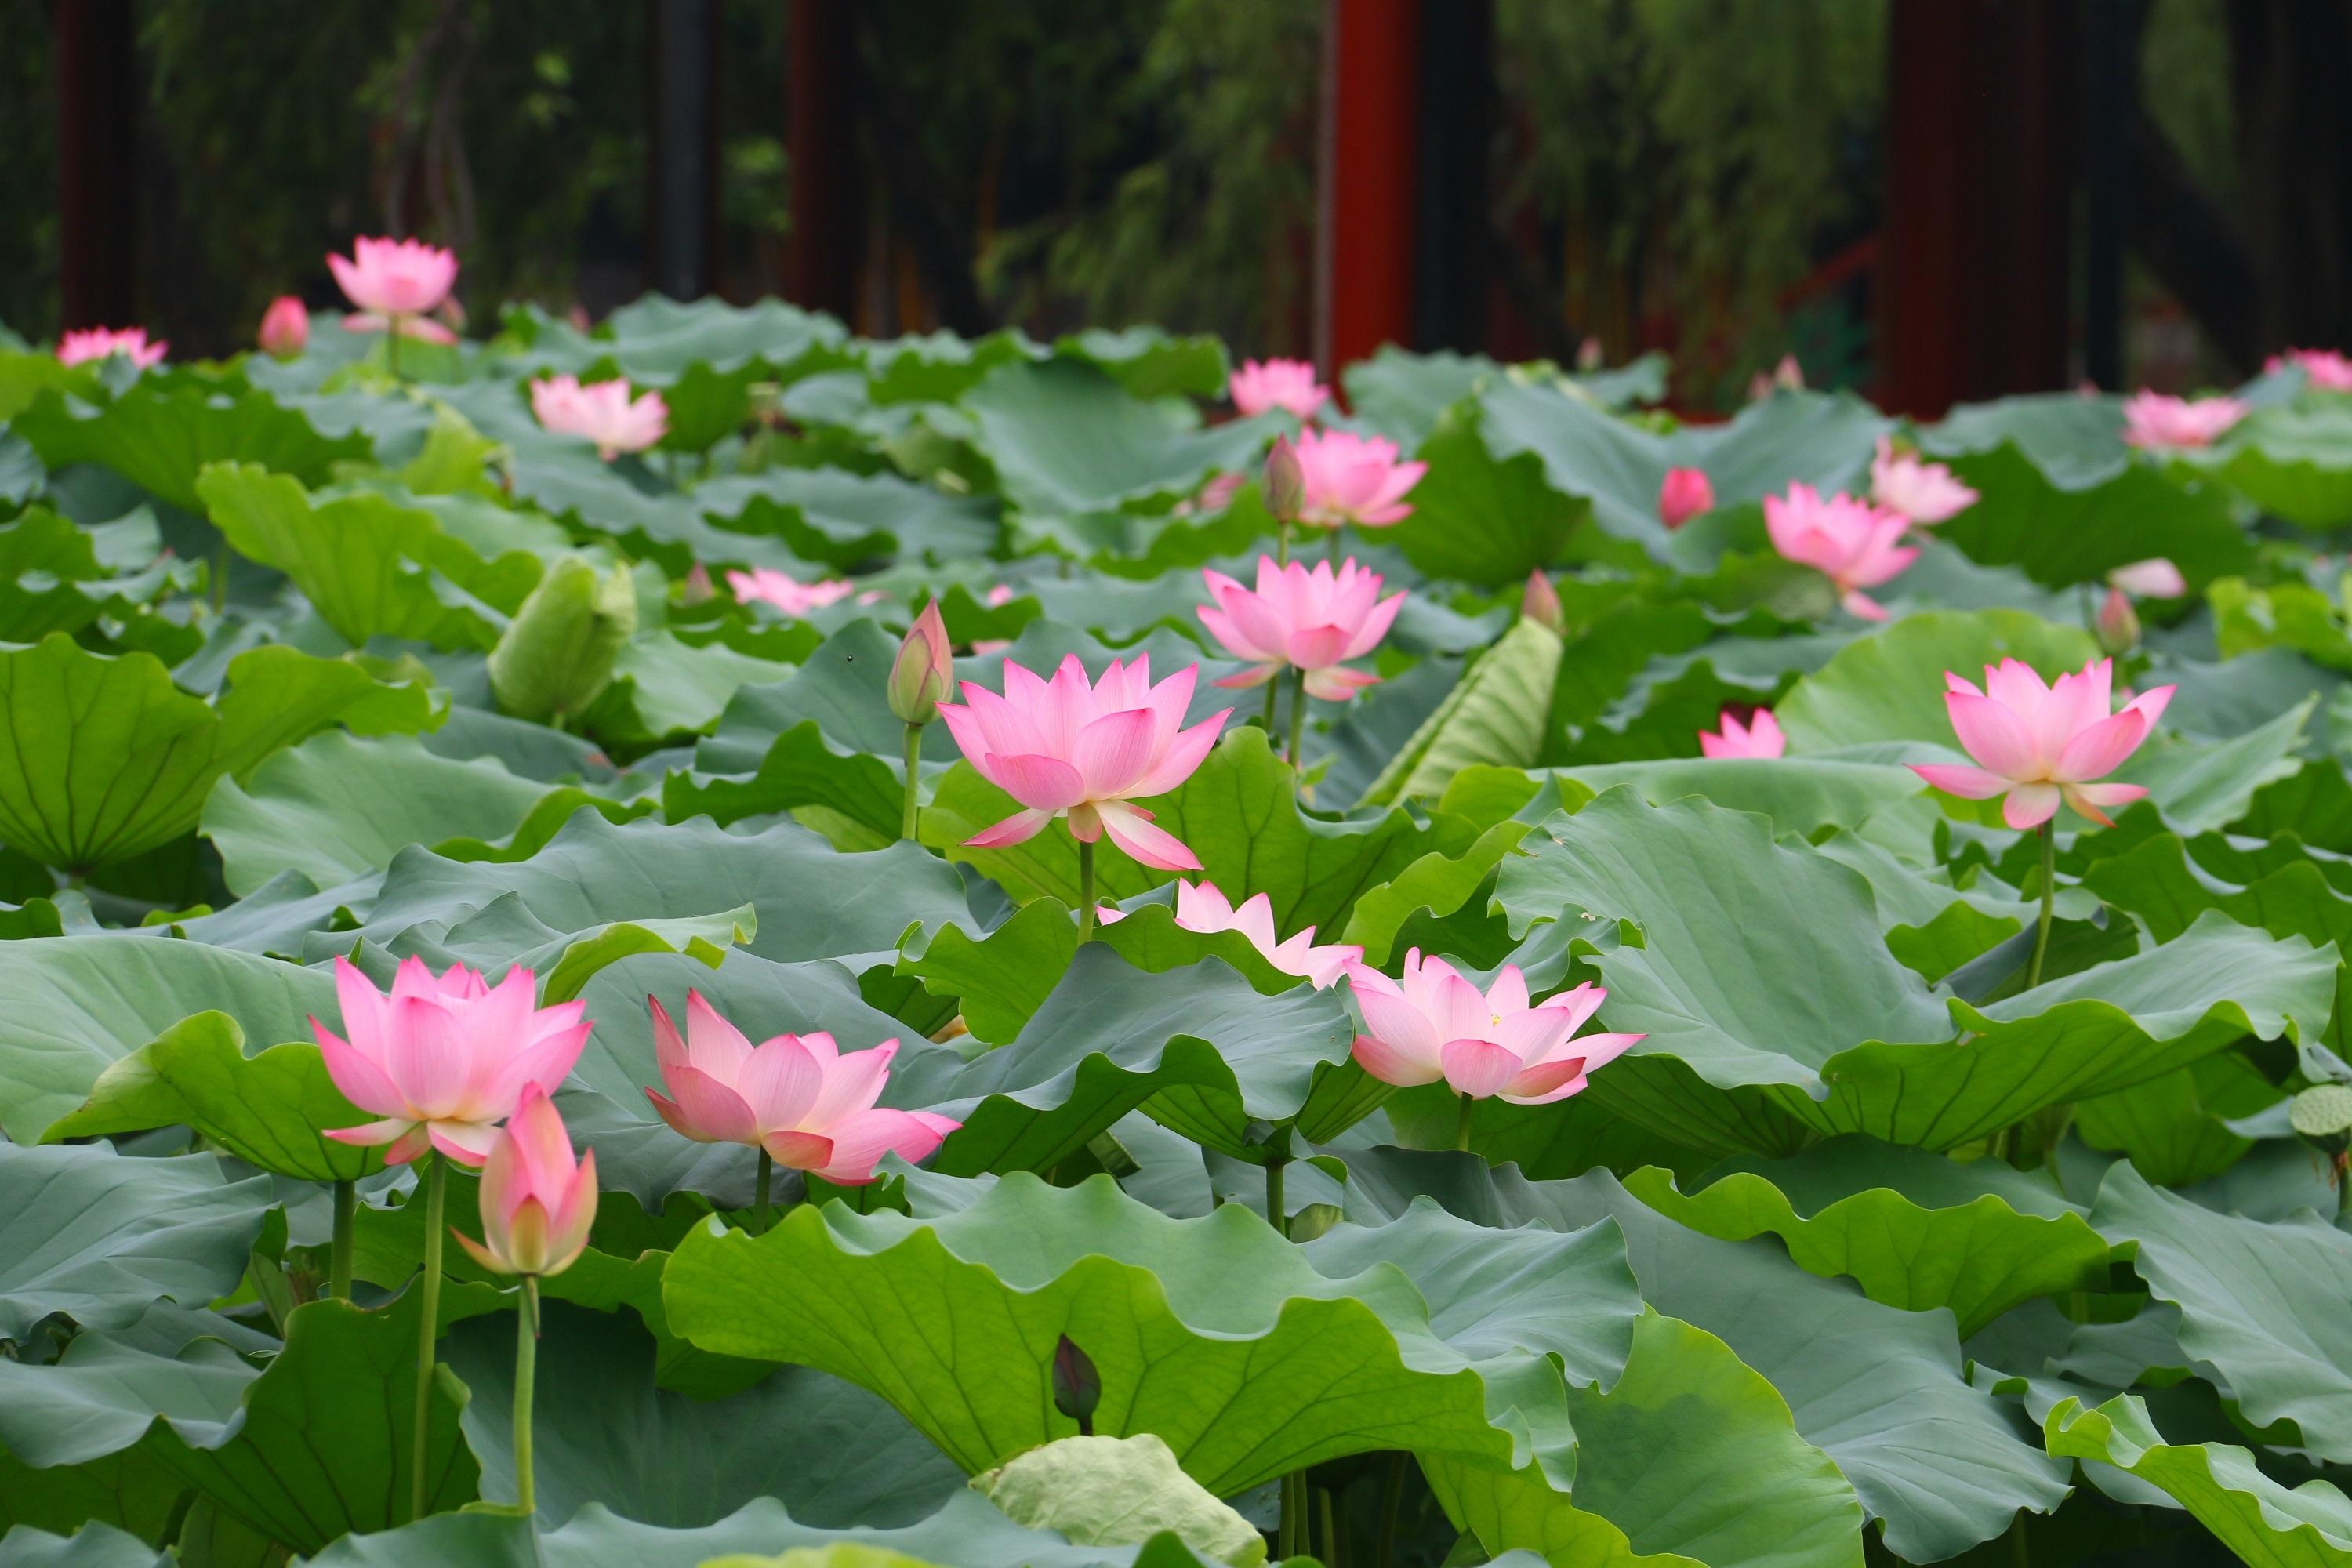 Blooming lotus flowers grace S China's Guangzhou